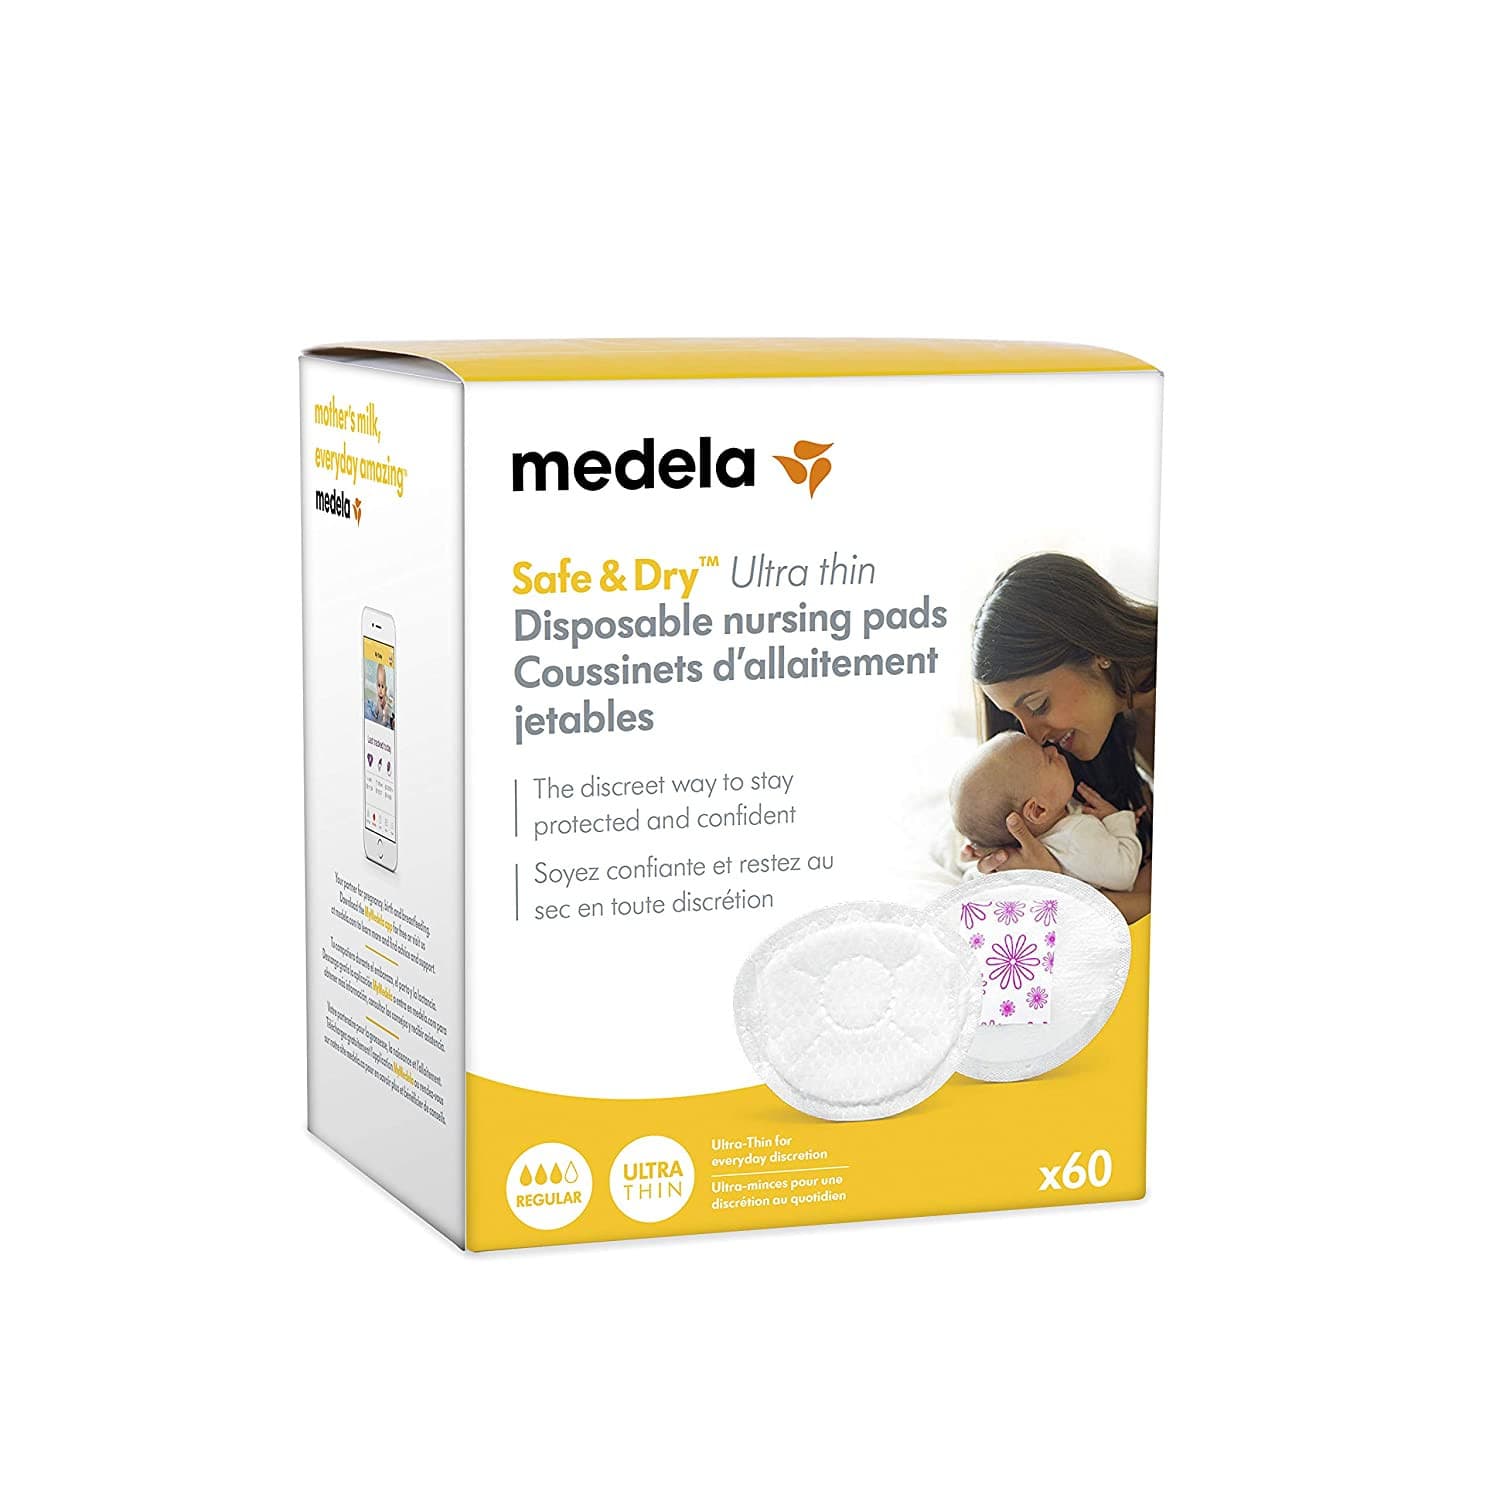 Medela Safe & Dry Ultra Thin Disposable Nursing Pads, 60 Count.